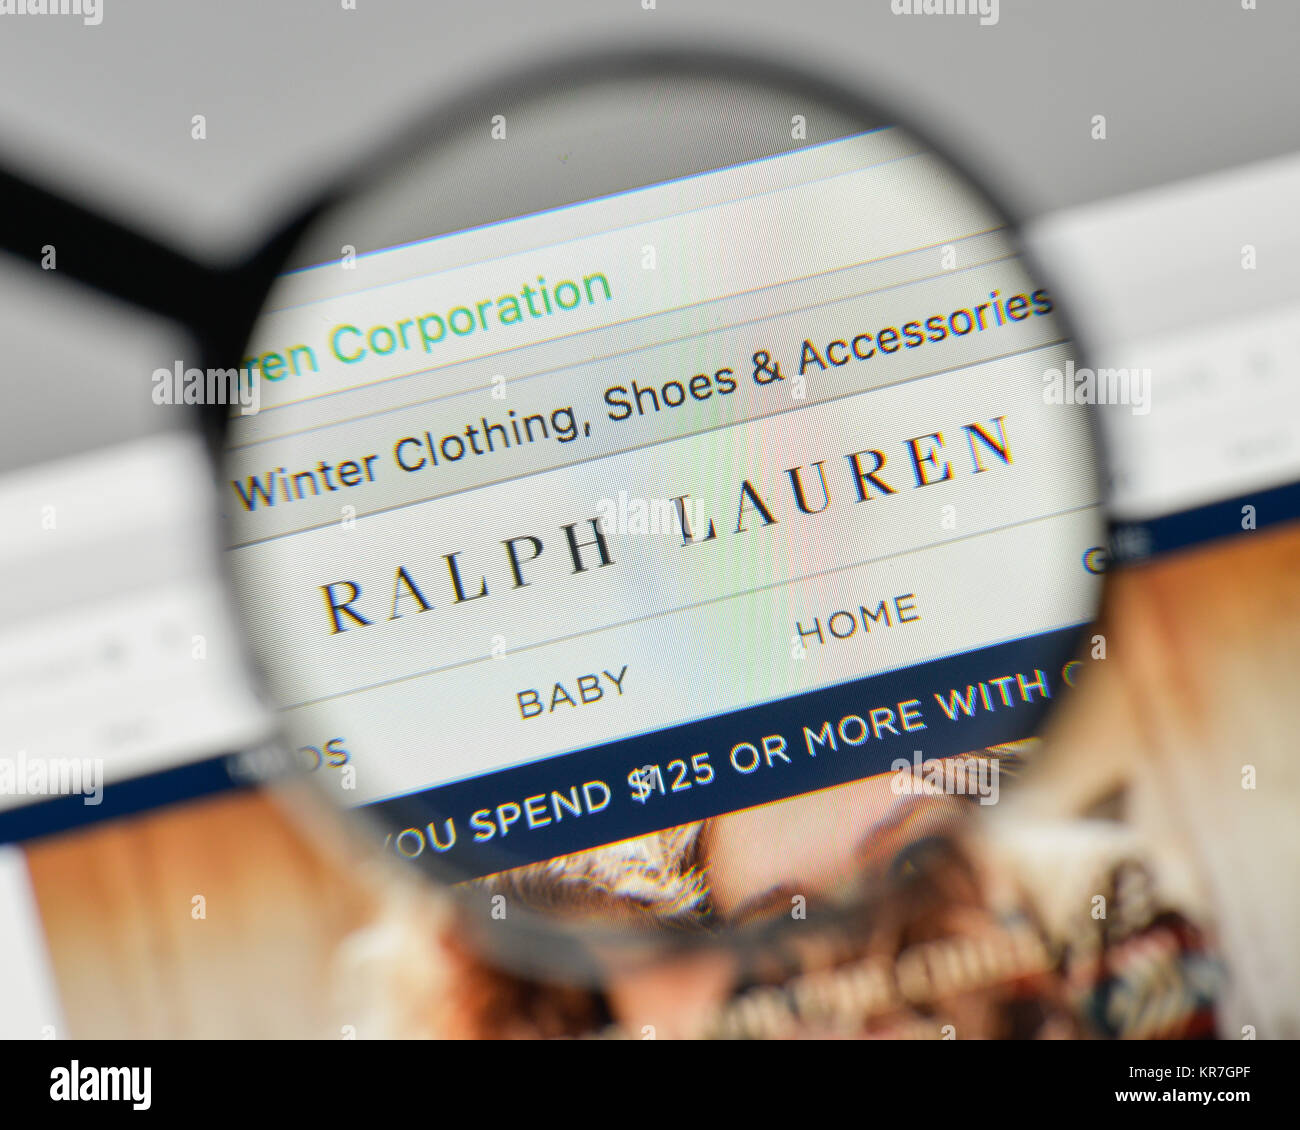 391 Ralph Lauren Logo Images, Stock Photos, 3D objects, & Vectors